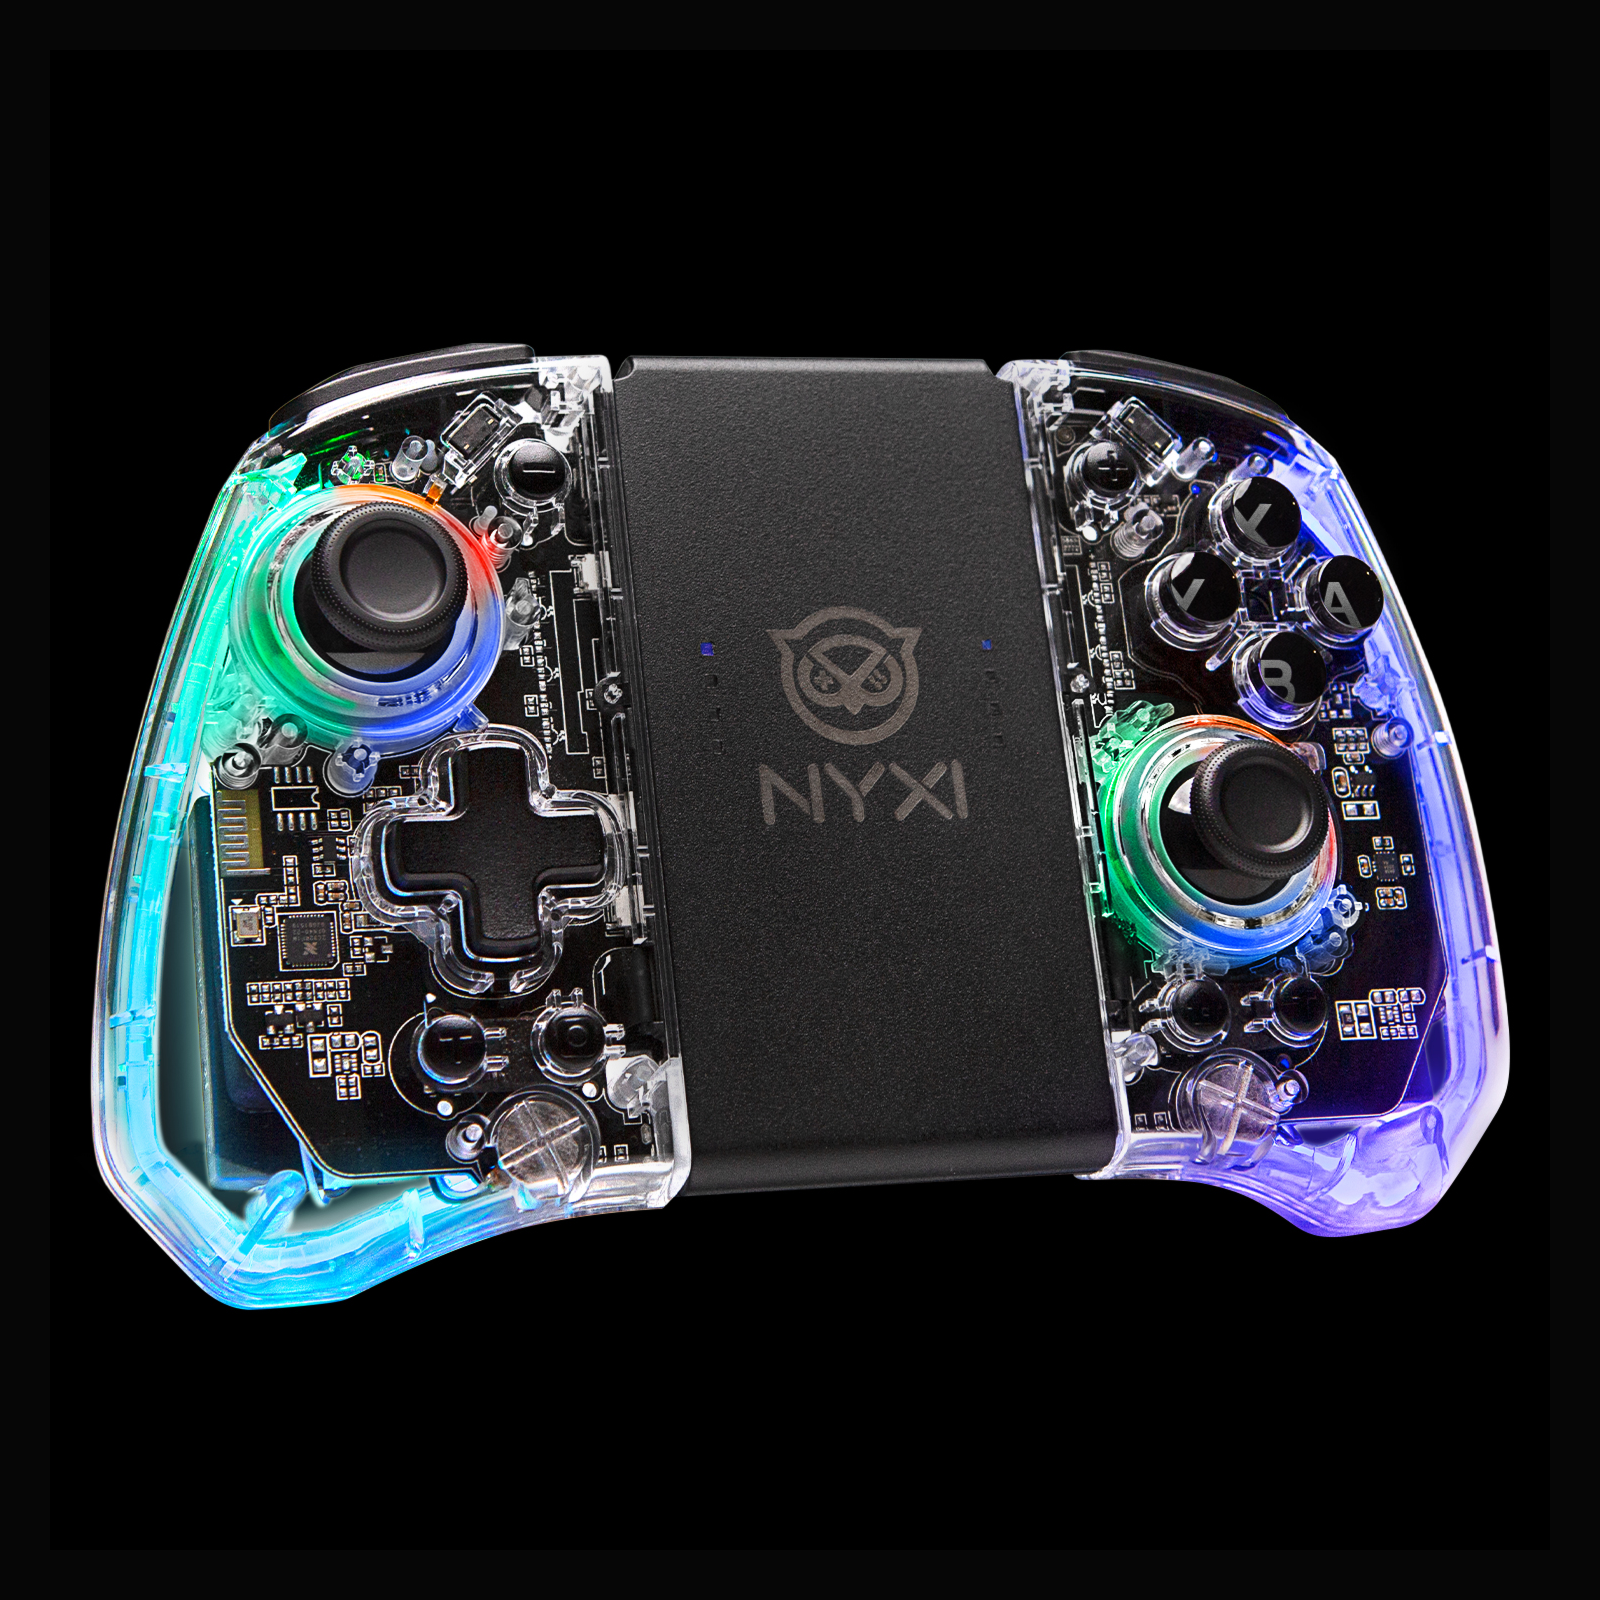 NYXI Joy-Pad Pro Controller For Nintendo Switch